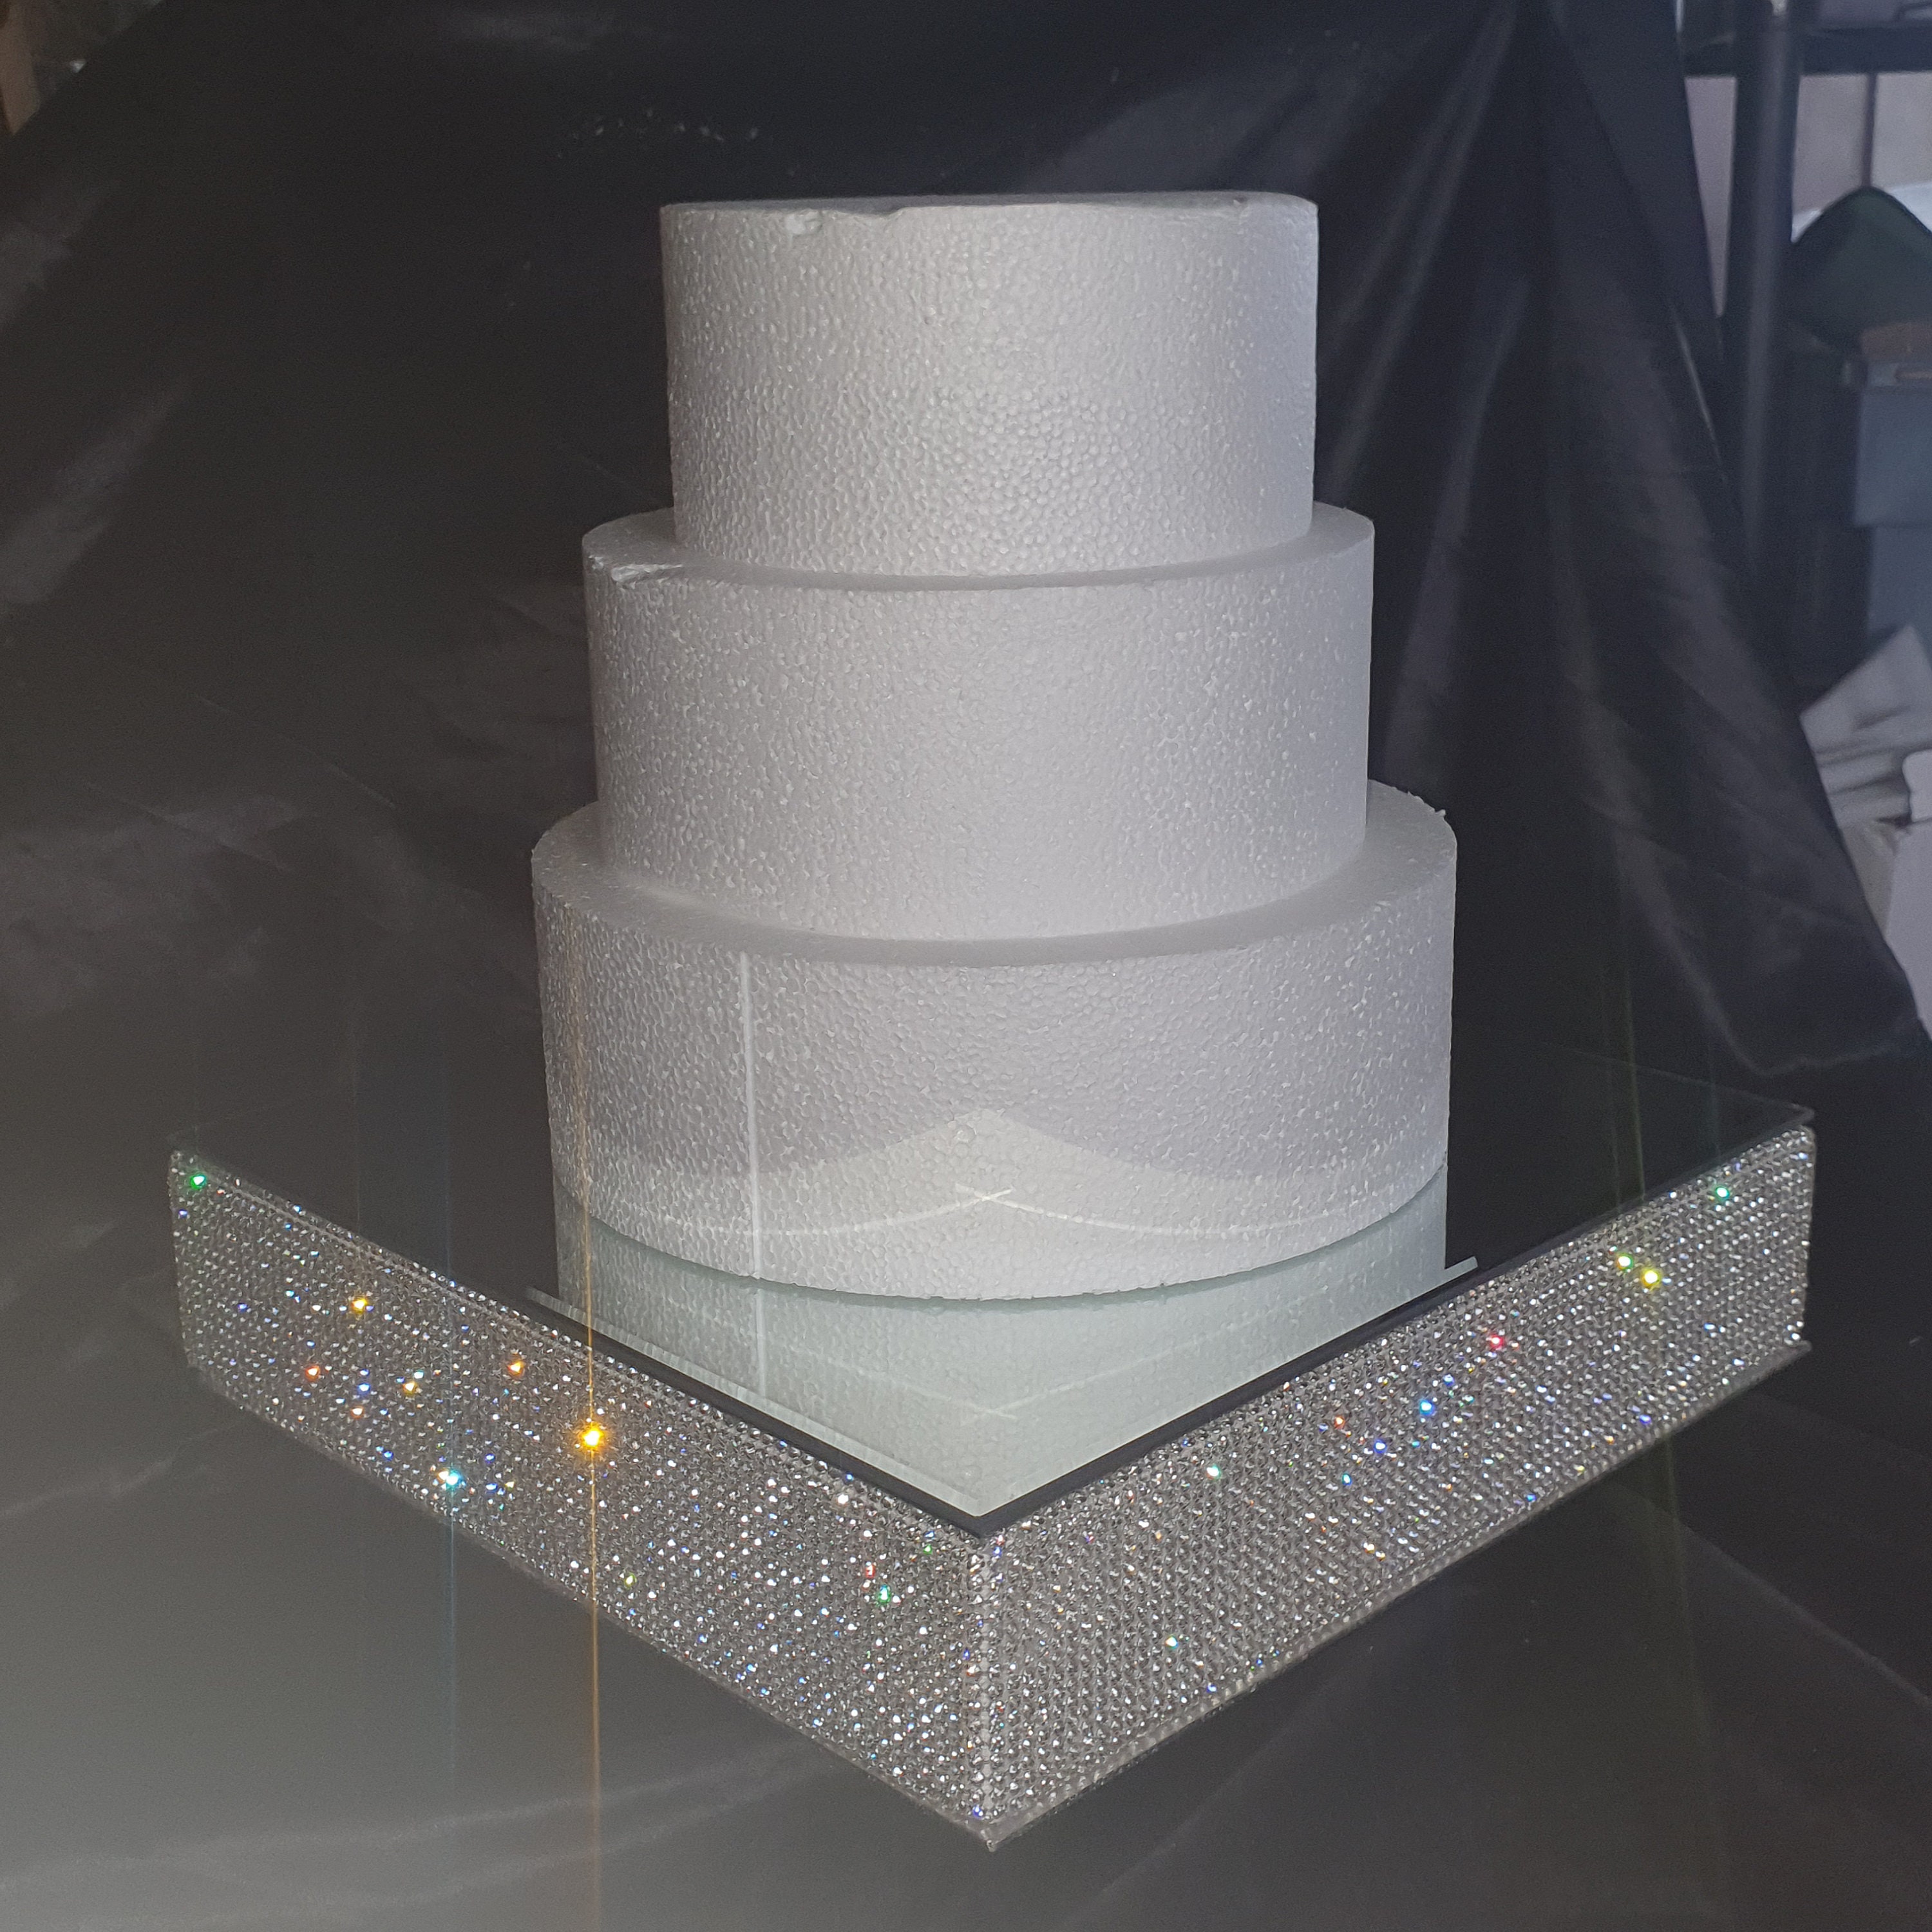 ROUND SQUARE GOLD SILVER MIRROR TOP DIAMANTE EFFECT WEDDING CAKE STAND  16" 